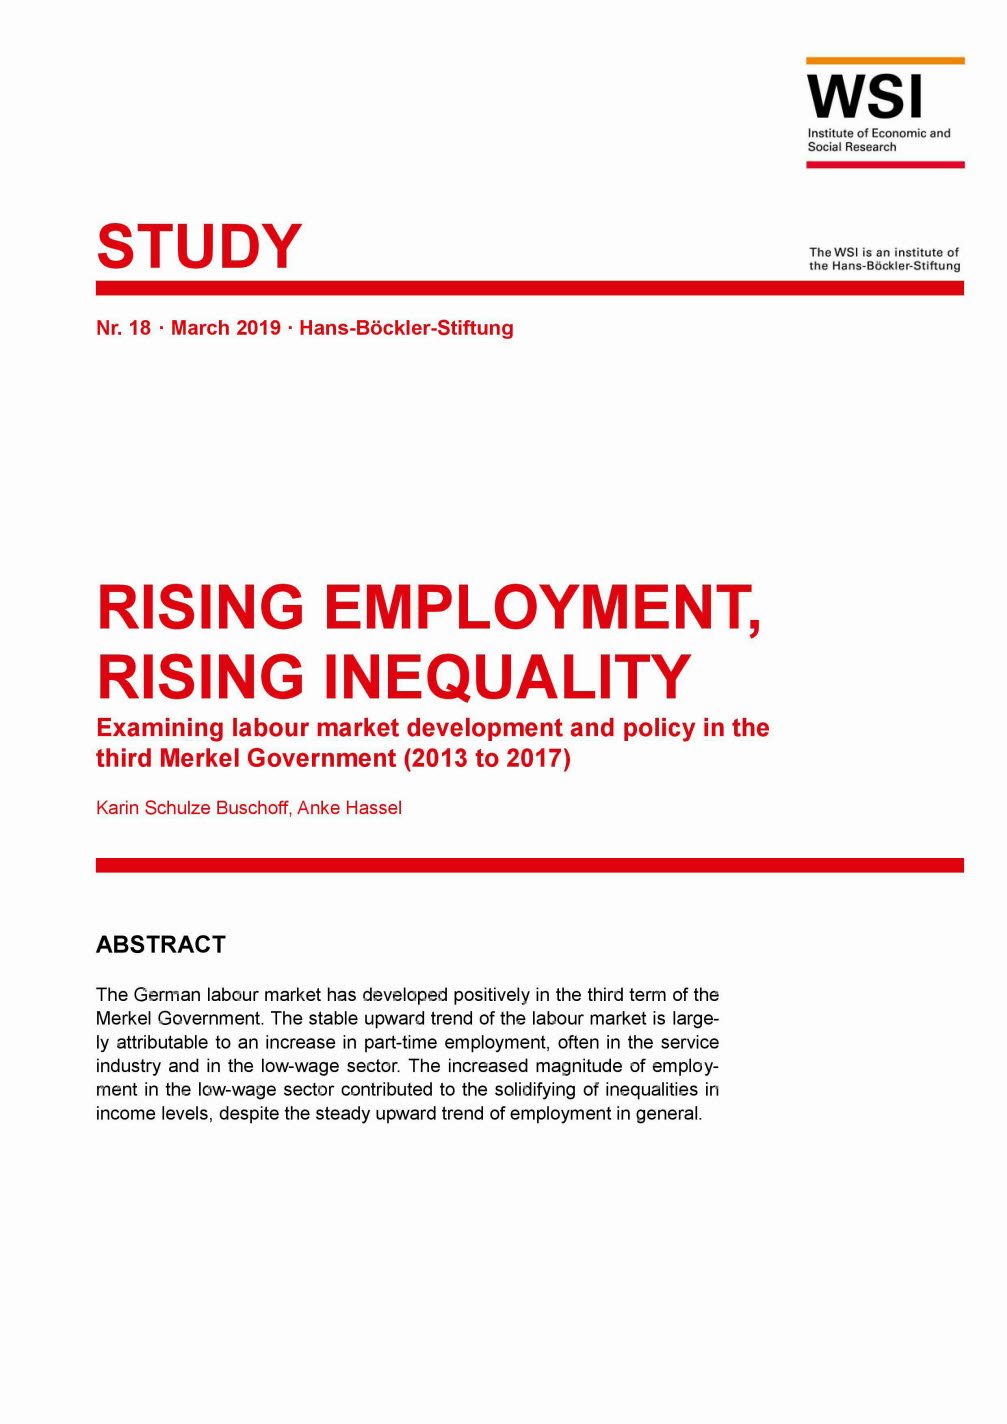 Rising employment, rising inequalitiy